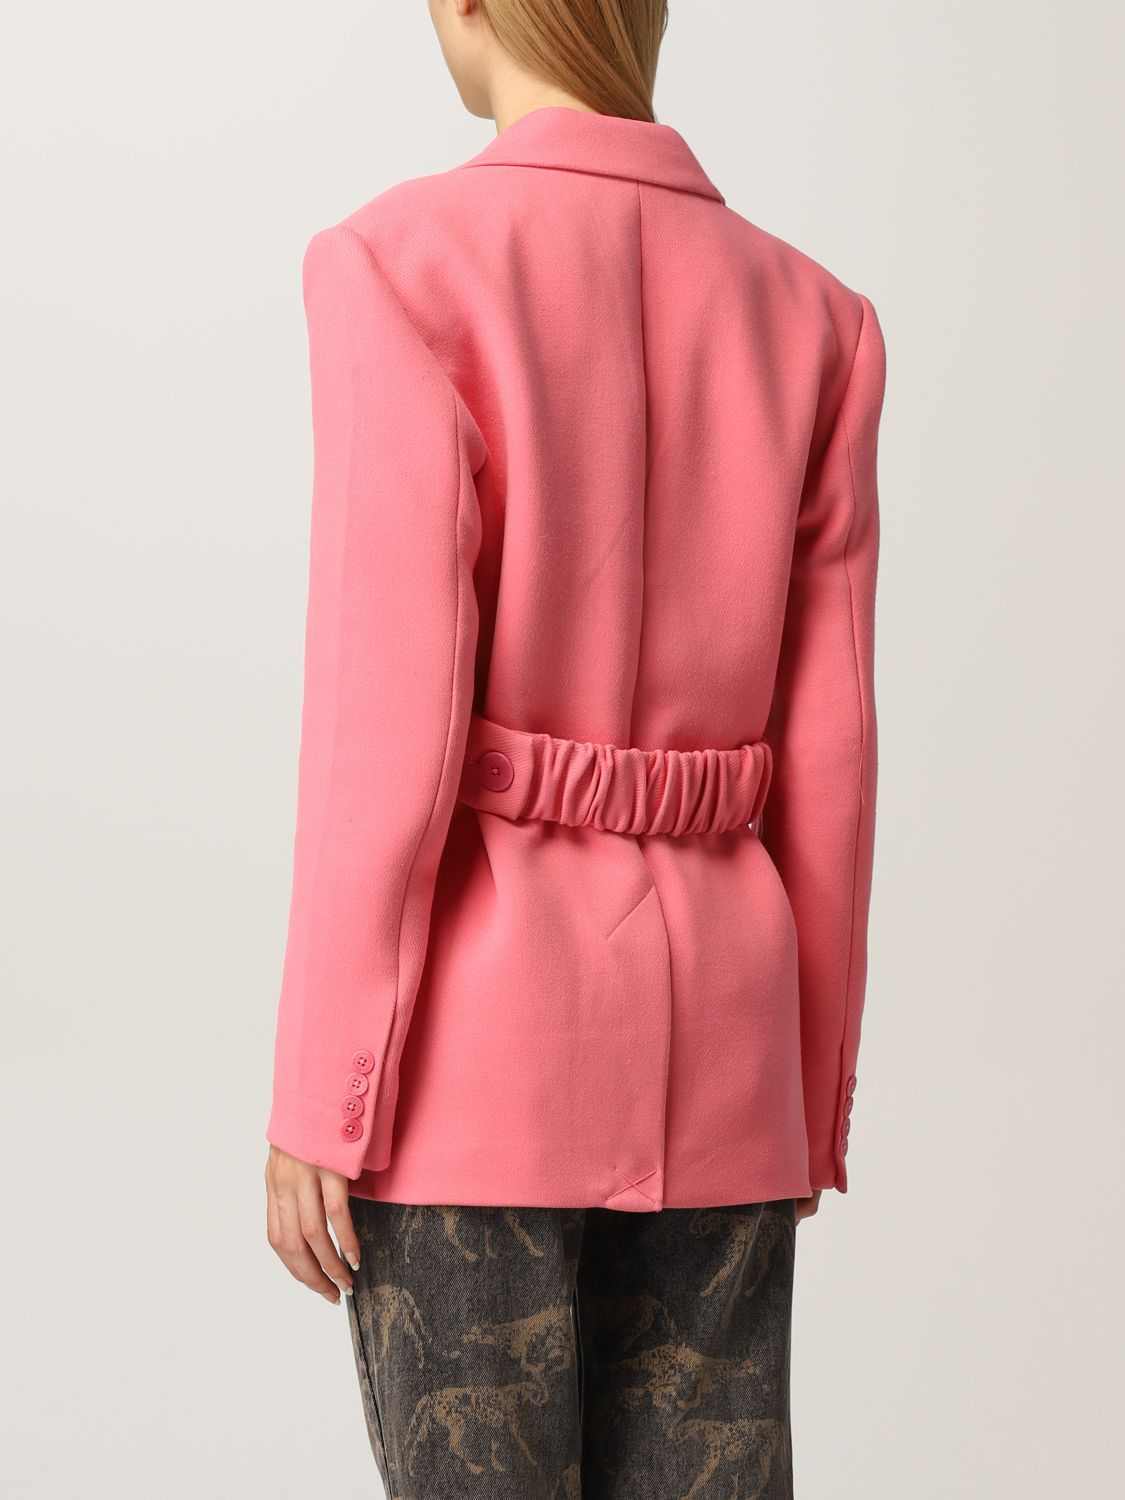 verkouden worden caravan Genealogie REMAIN: blazer for woman - Pink | Remain blazer RM663 online on GIGLIO.COM